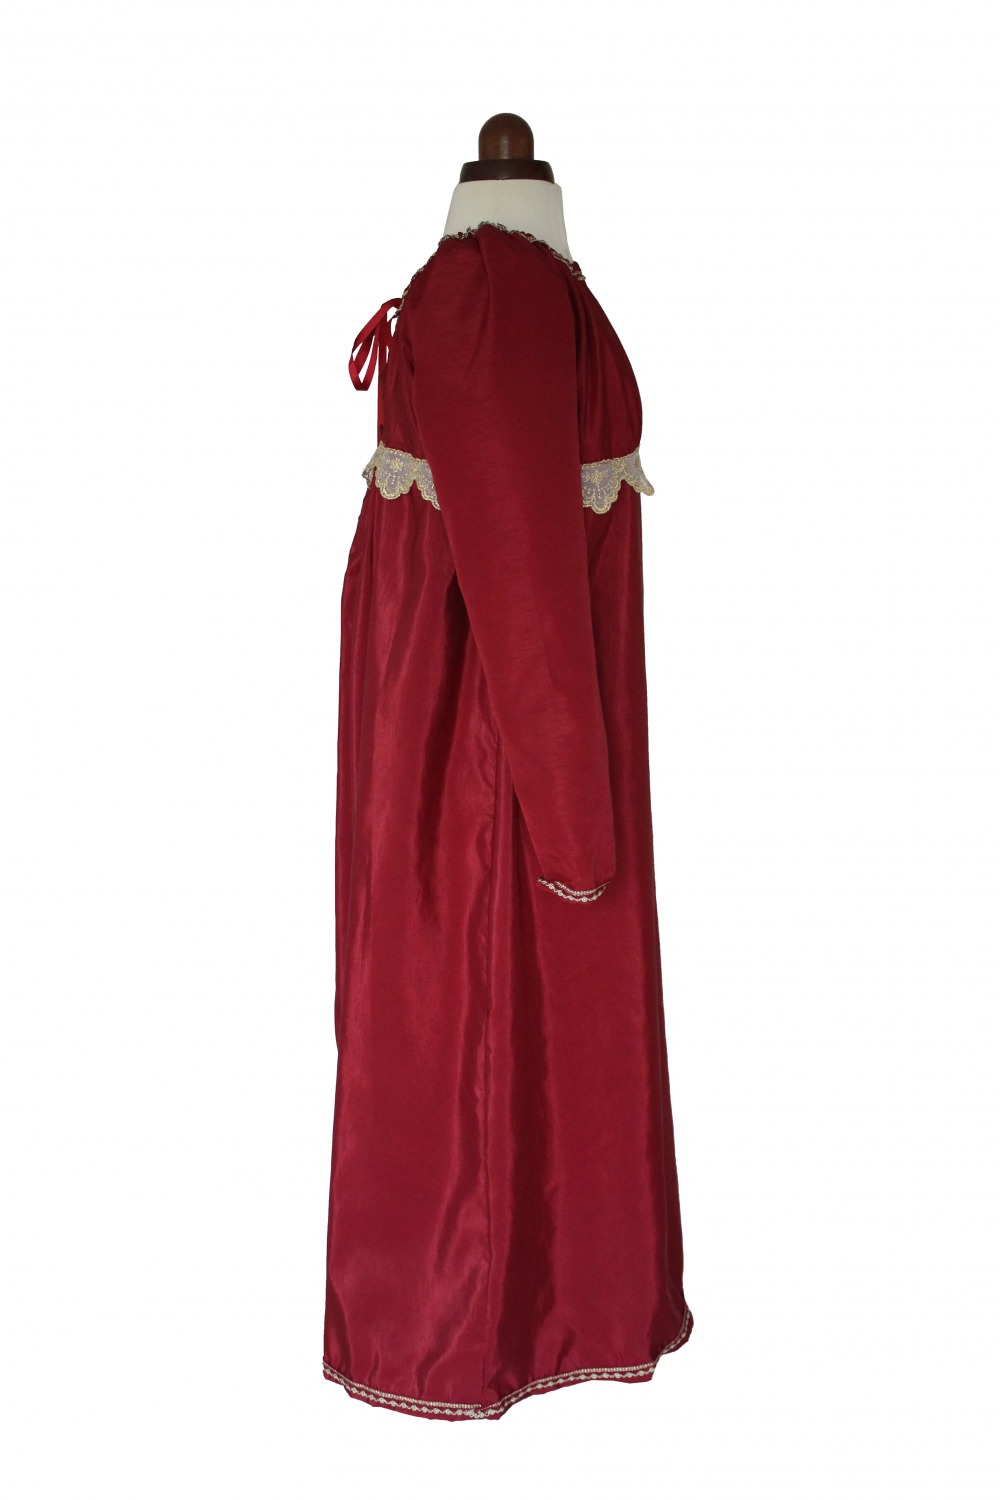 Ladies 18th 19th Century Regency Jane Austen Costume Evening Gown Size 14 - 16 Image